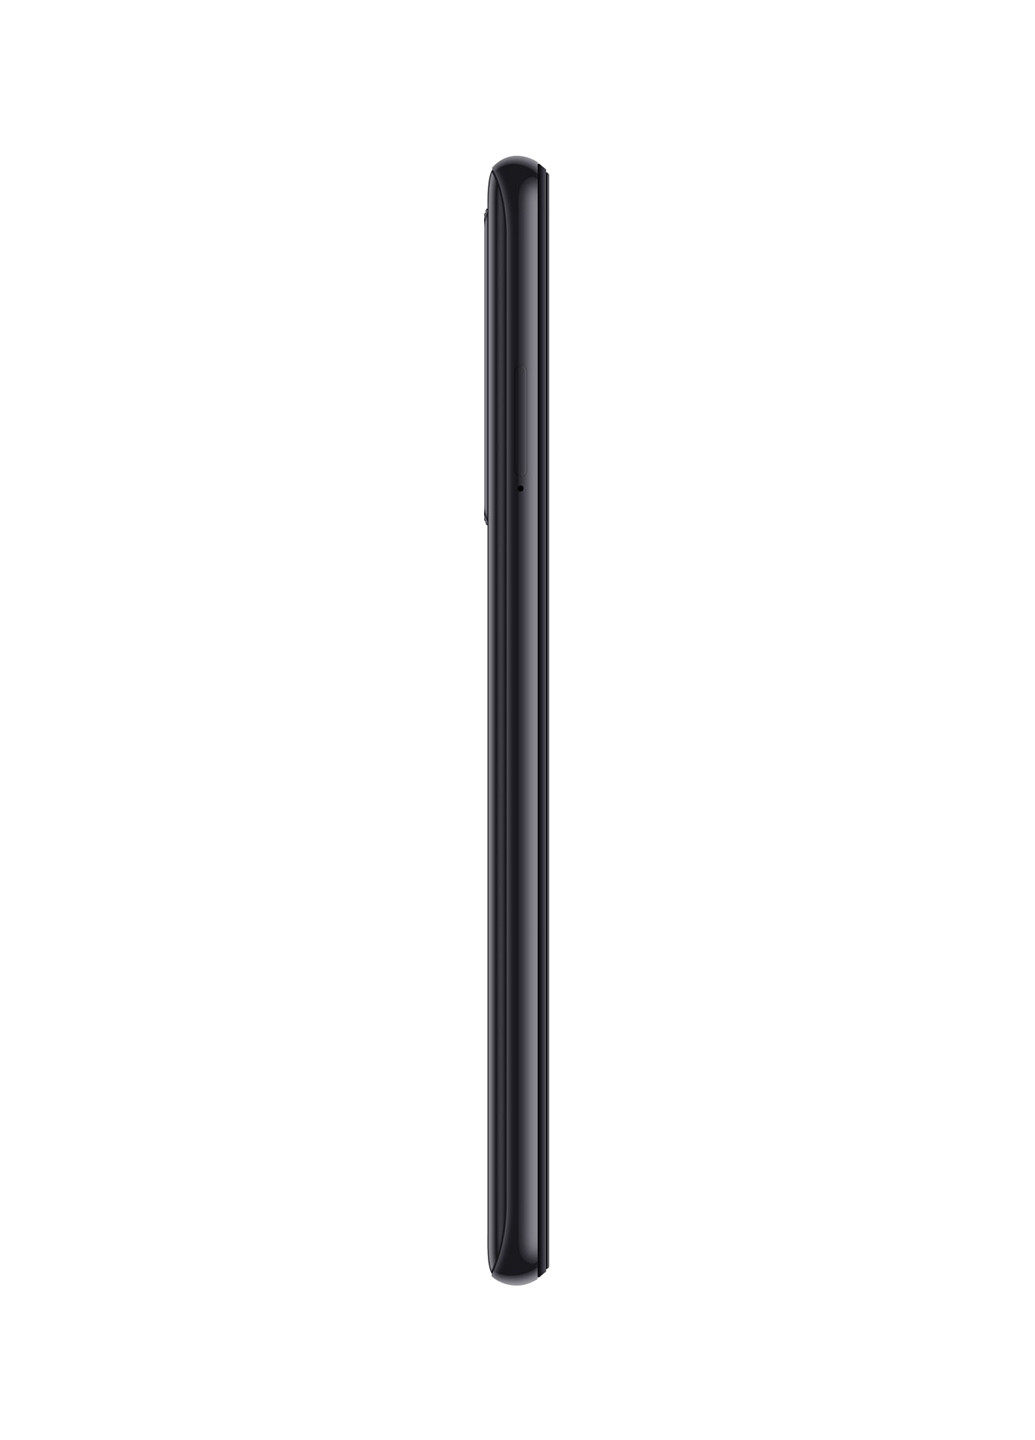 Смартфон Redmi Note 8 Pro 6 / 64GB Grey Xiaomi redmi note 8 pro 6/64gb grey (155433452)